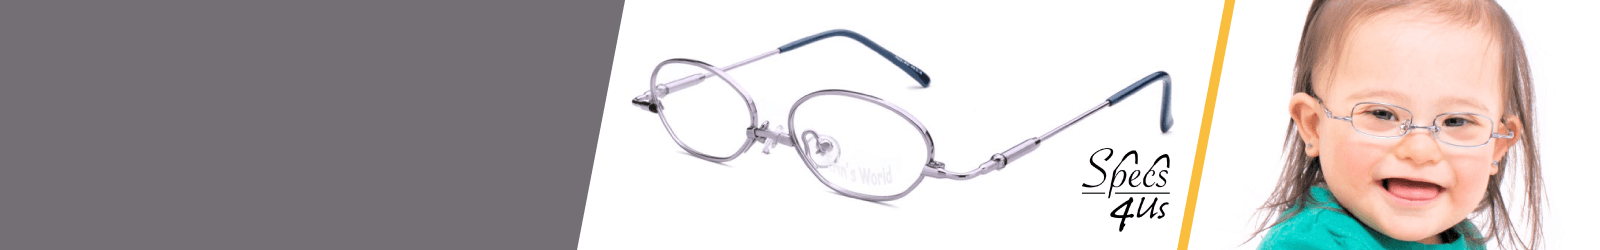 Fuchsia Specs4us Eyewear for Kids